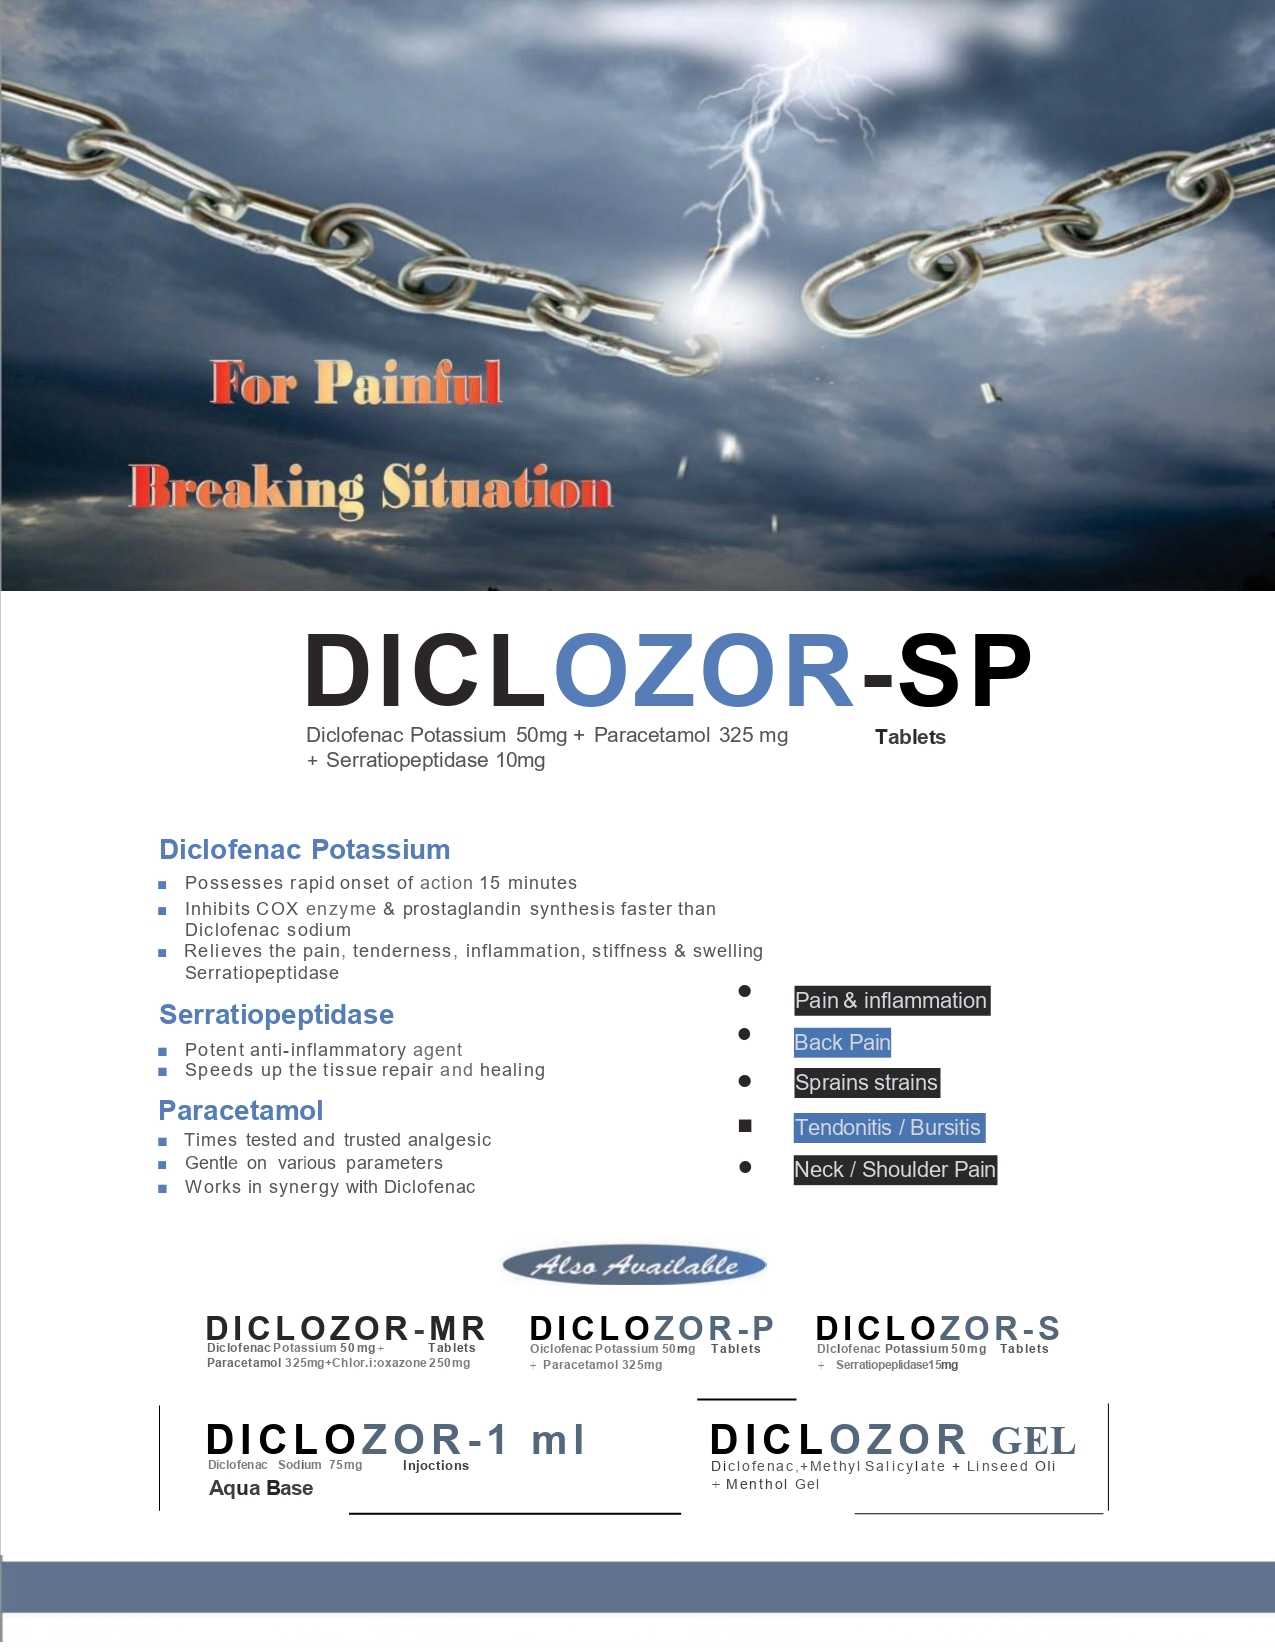 Diclozor-SP